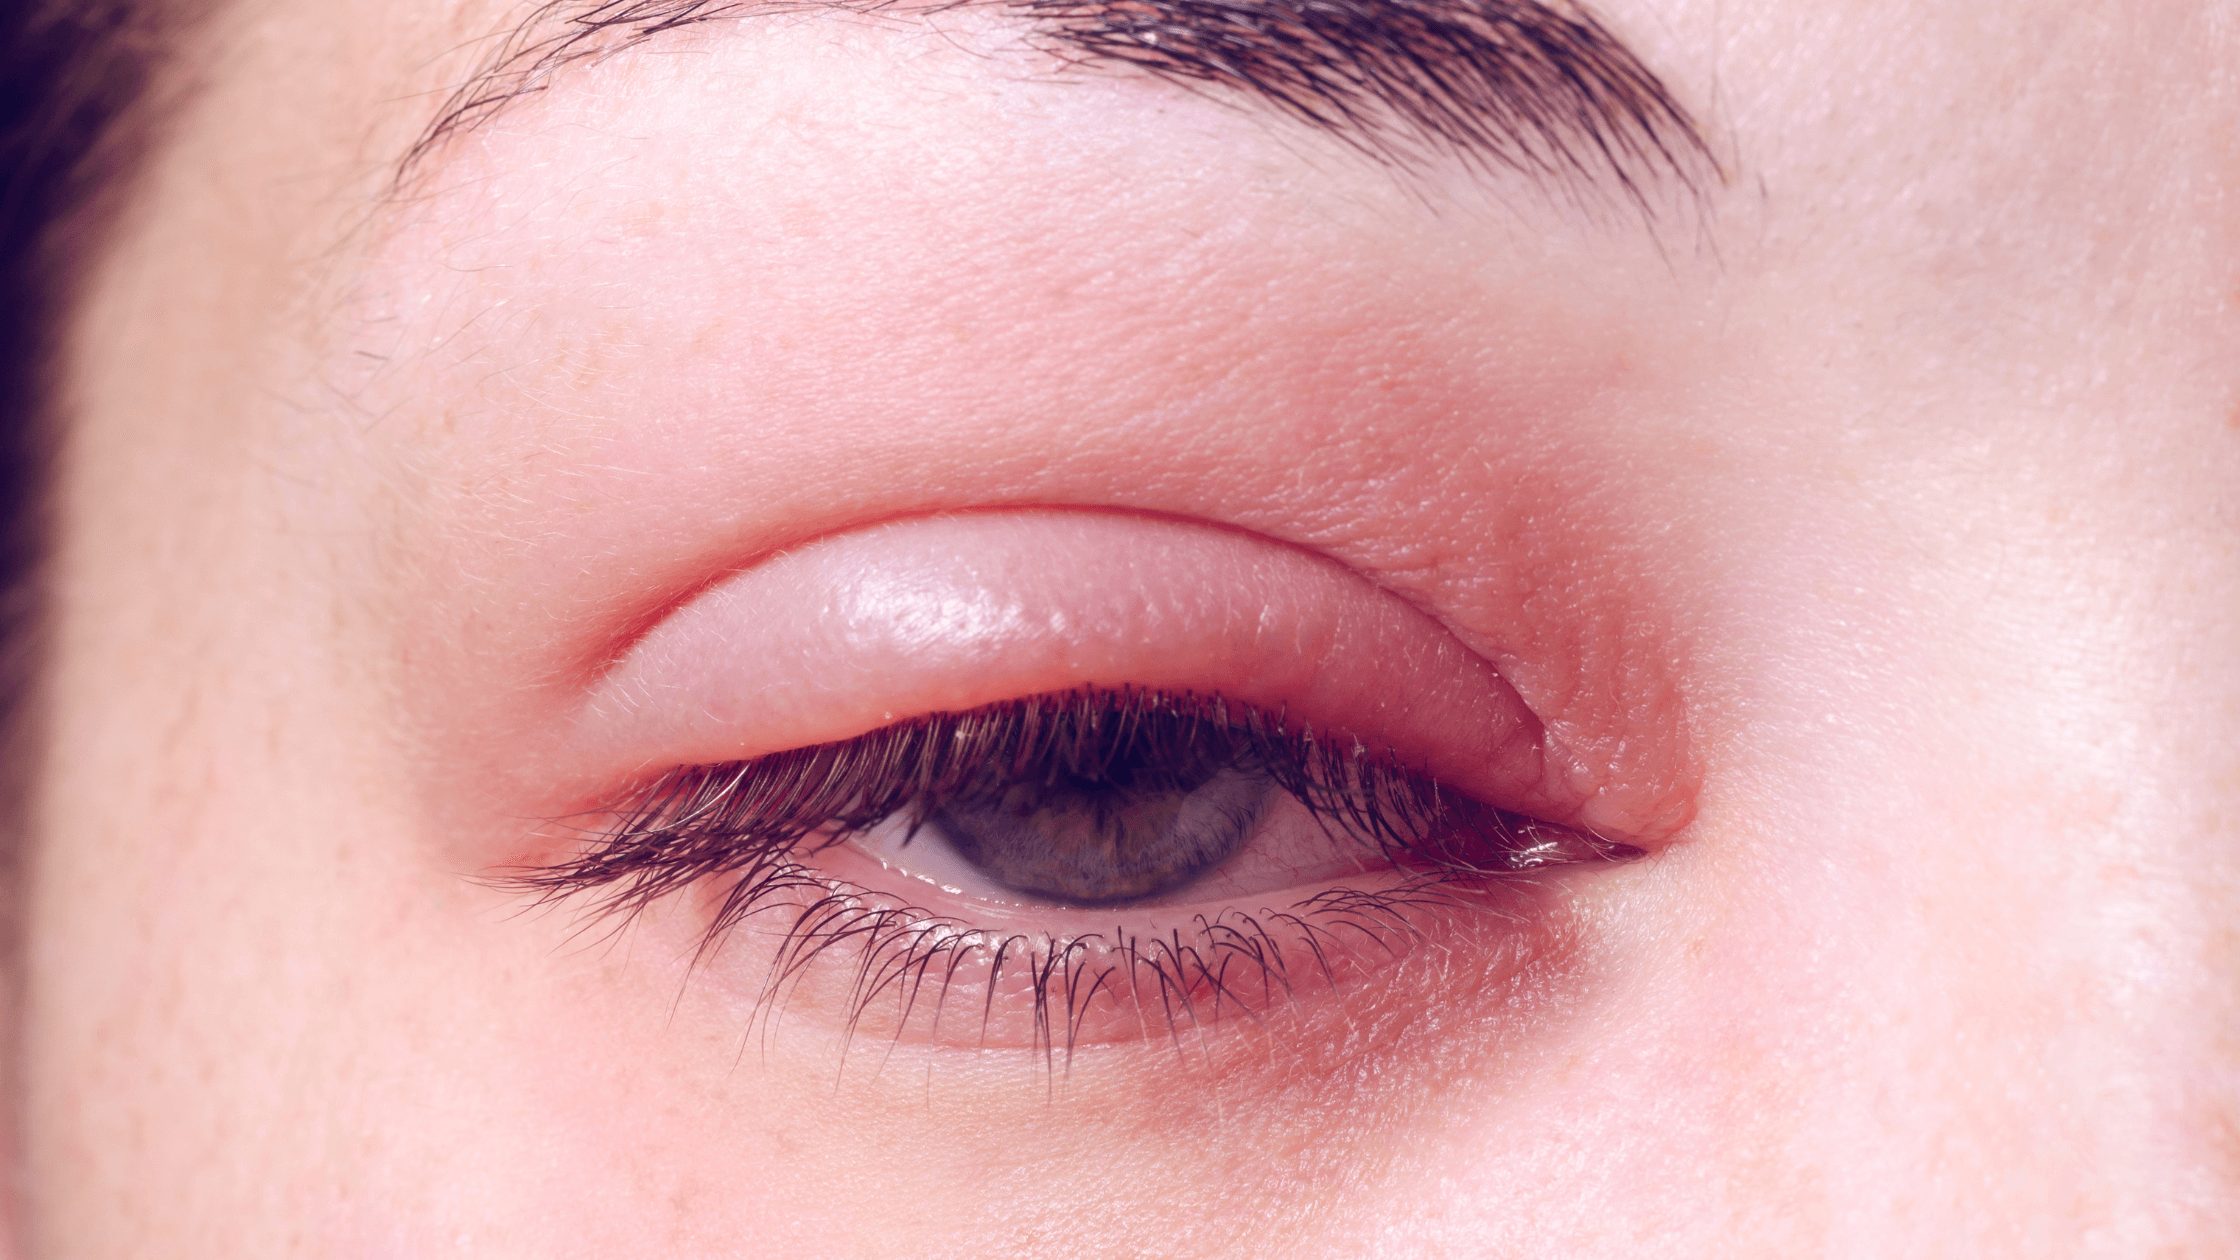 Eye infection, eye health, signs of common eye infections